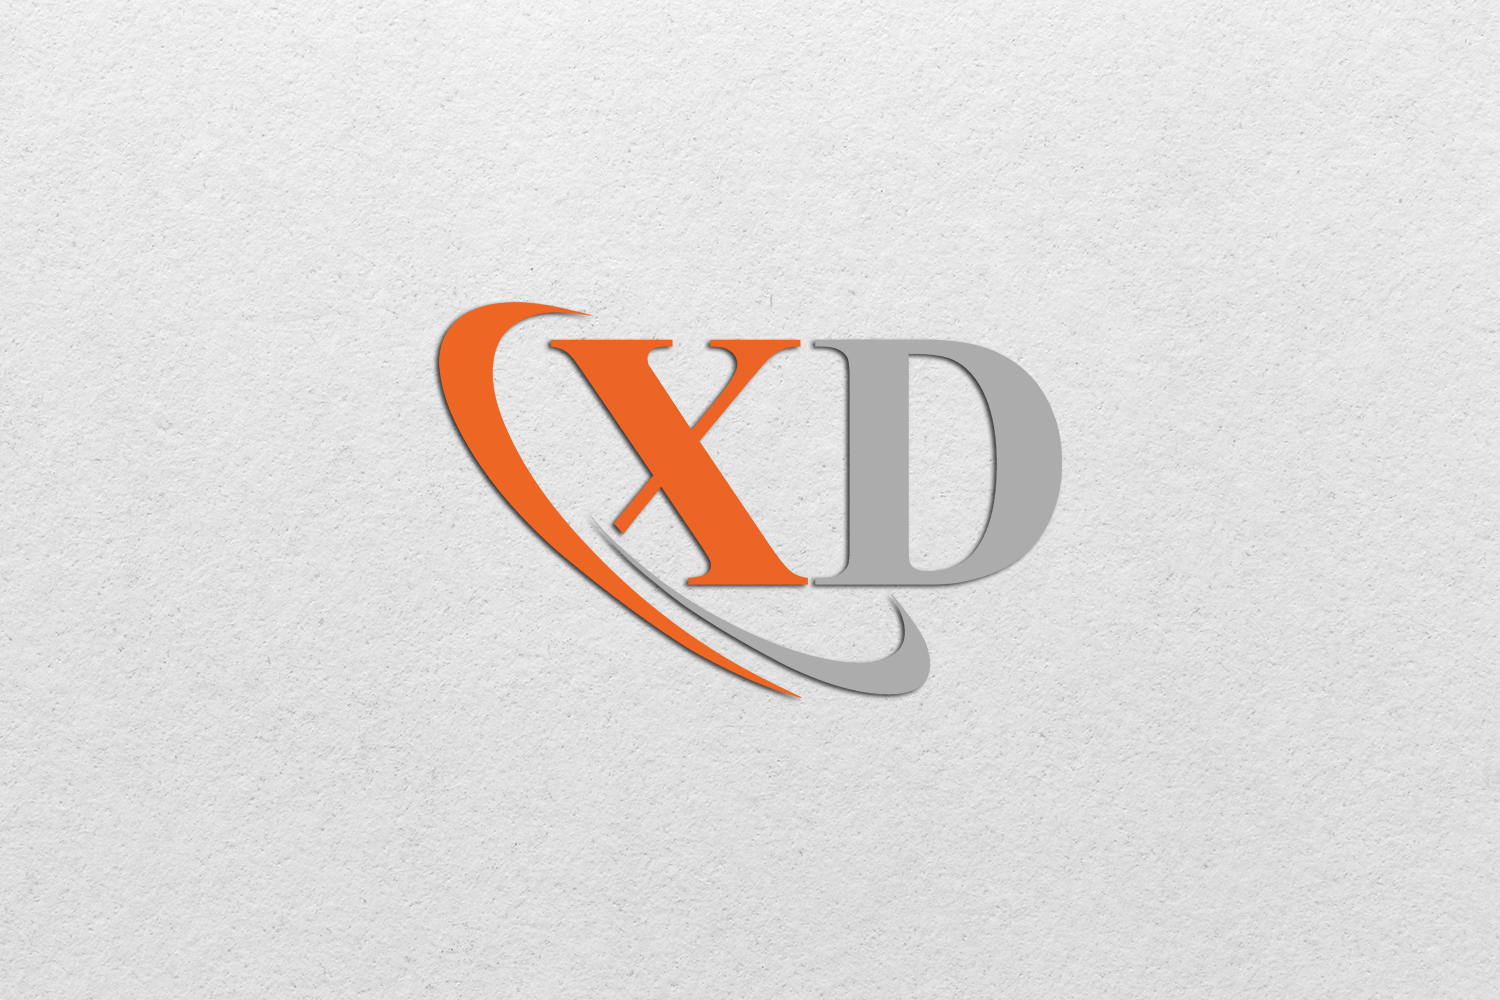 Simple Business Logo Design